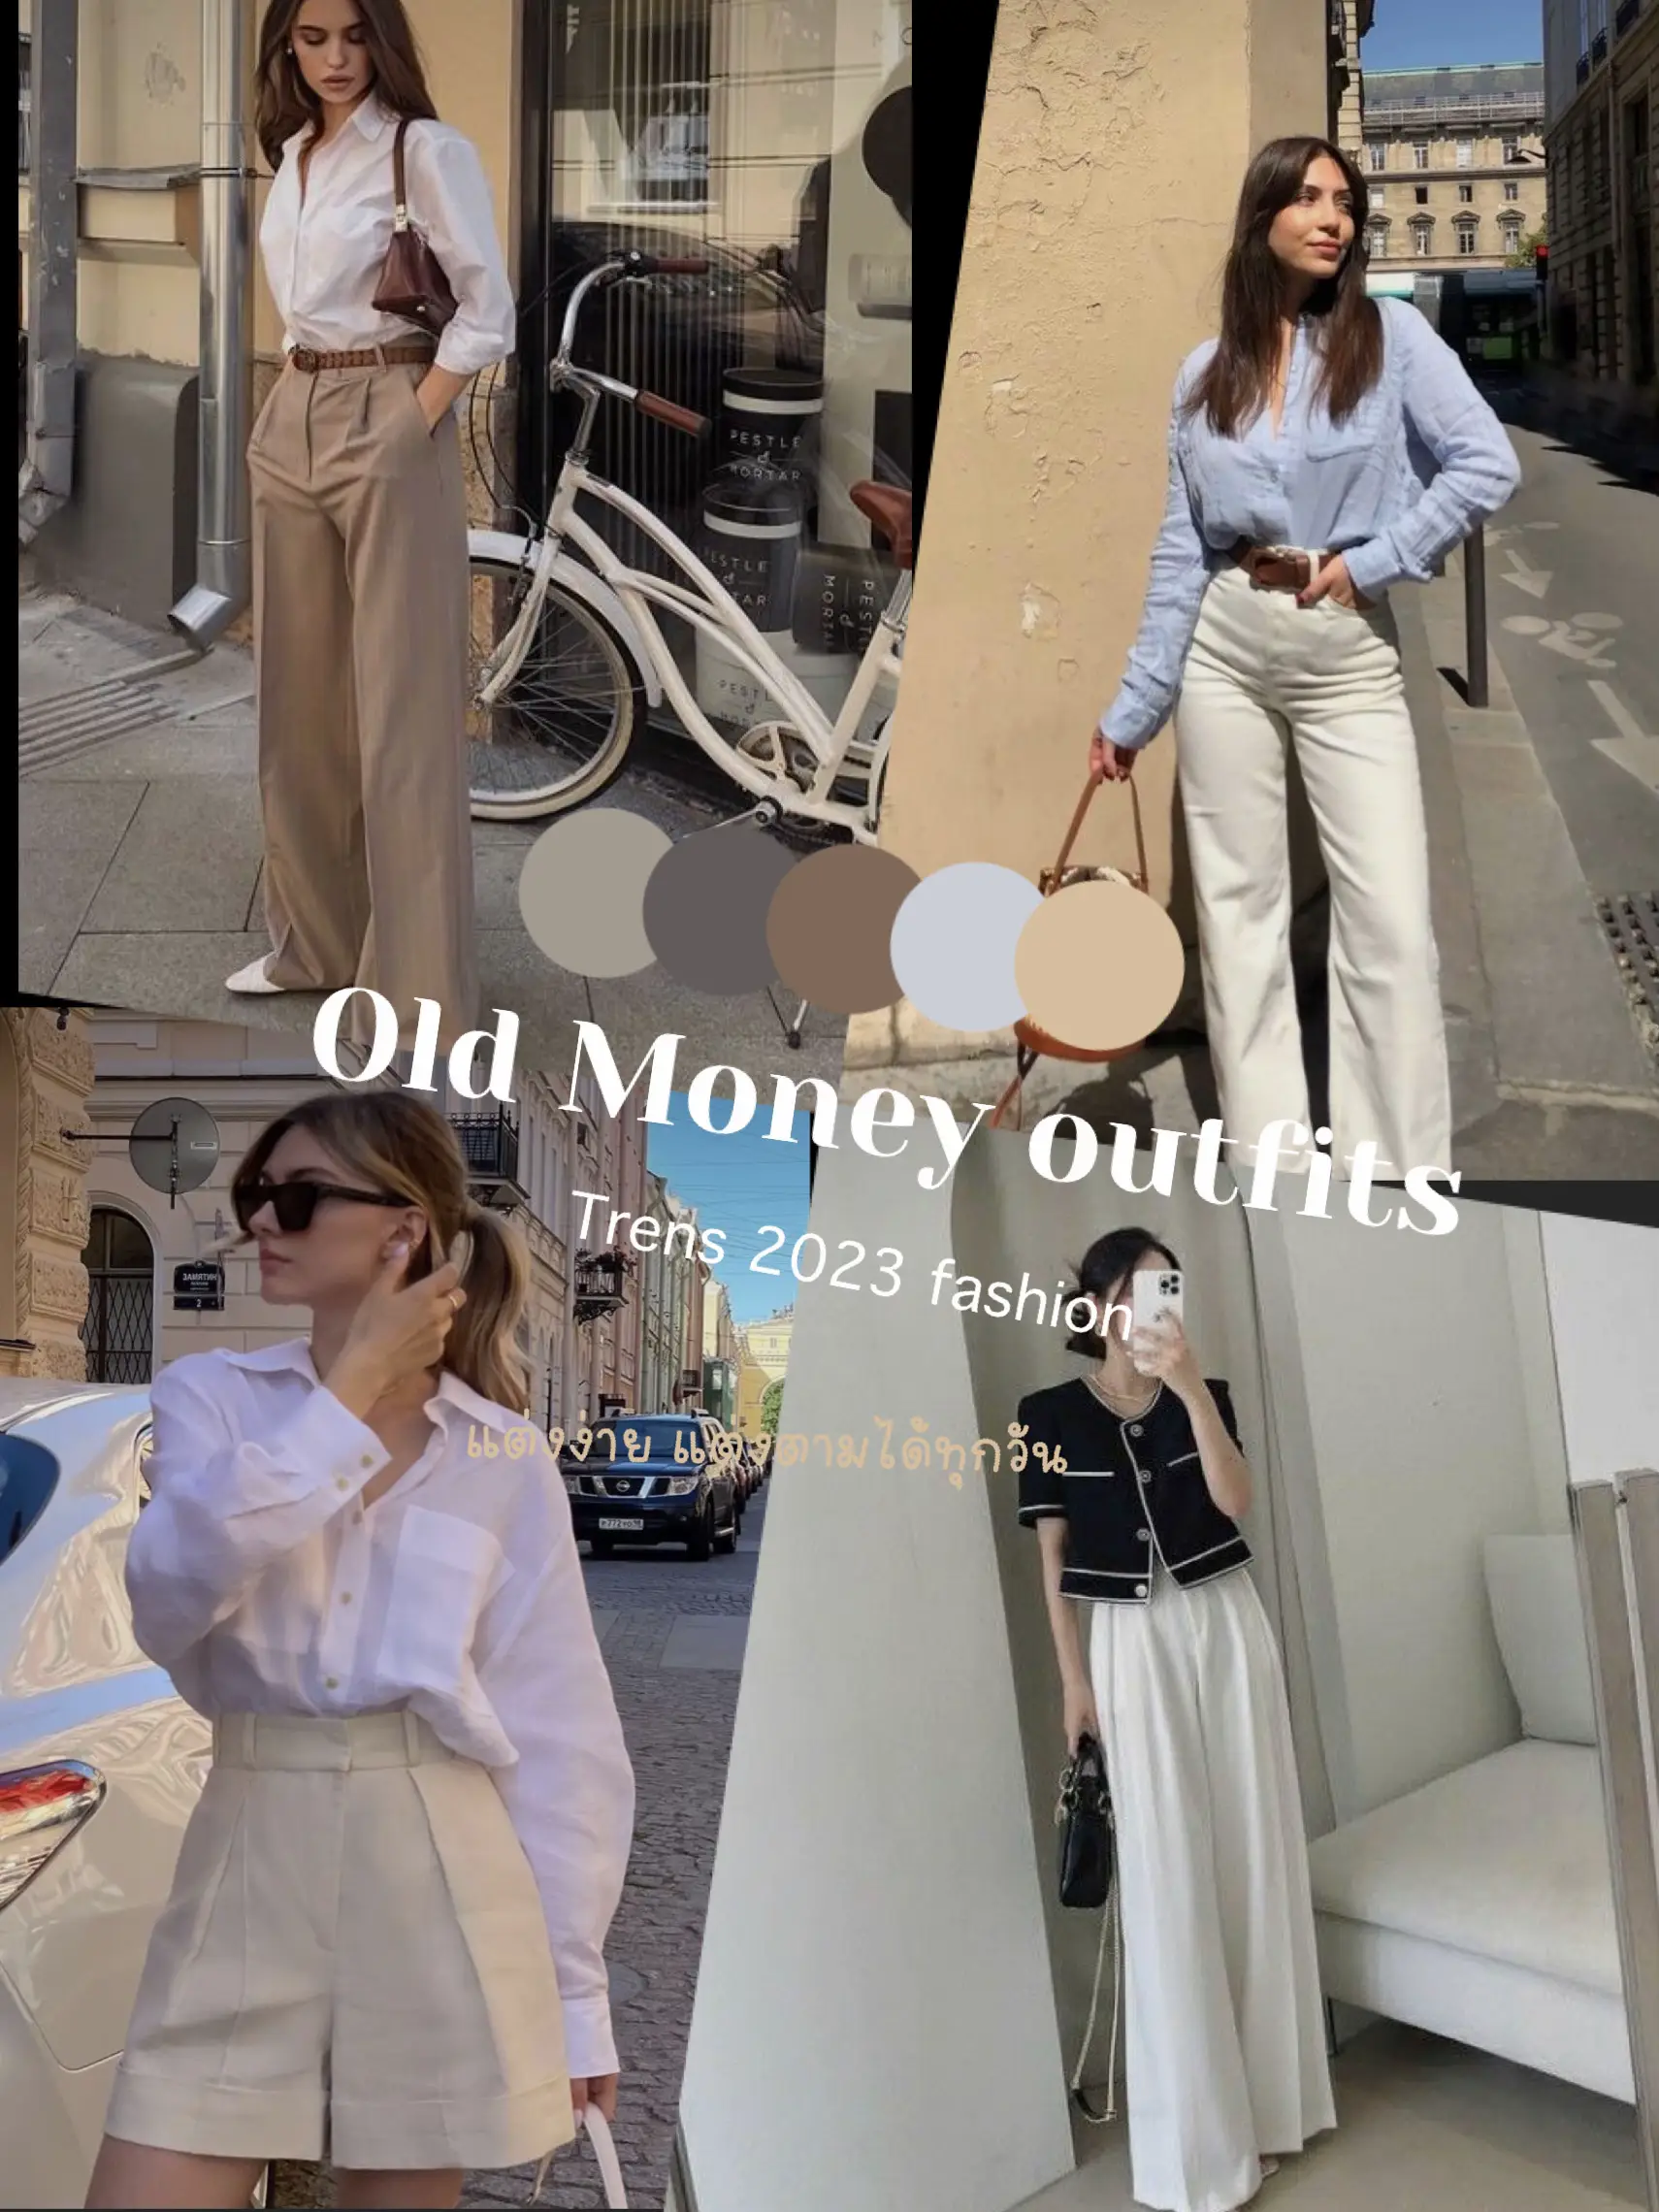 Shopping time #louisvuitton #thatgirl #aesthetics #oldmoney in 2023